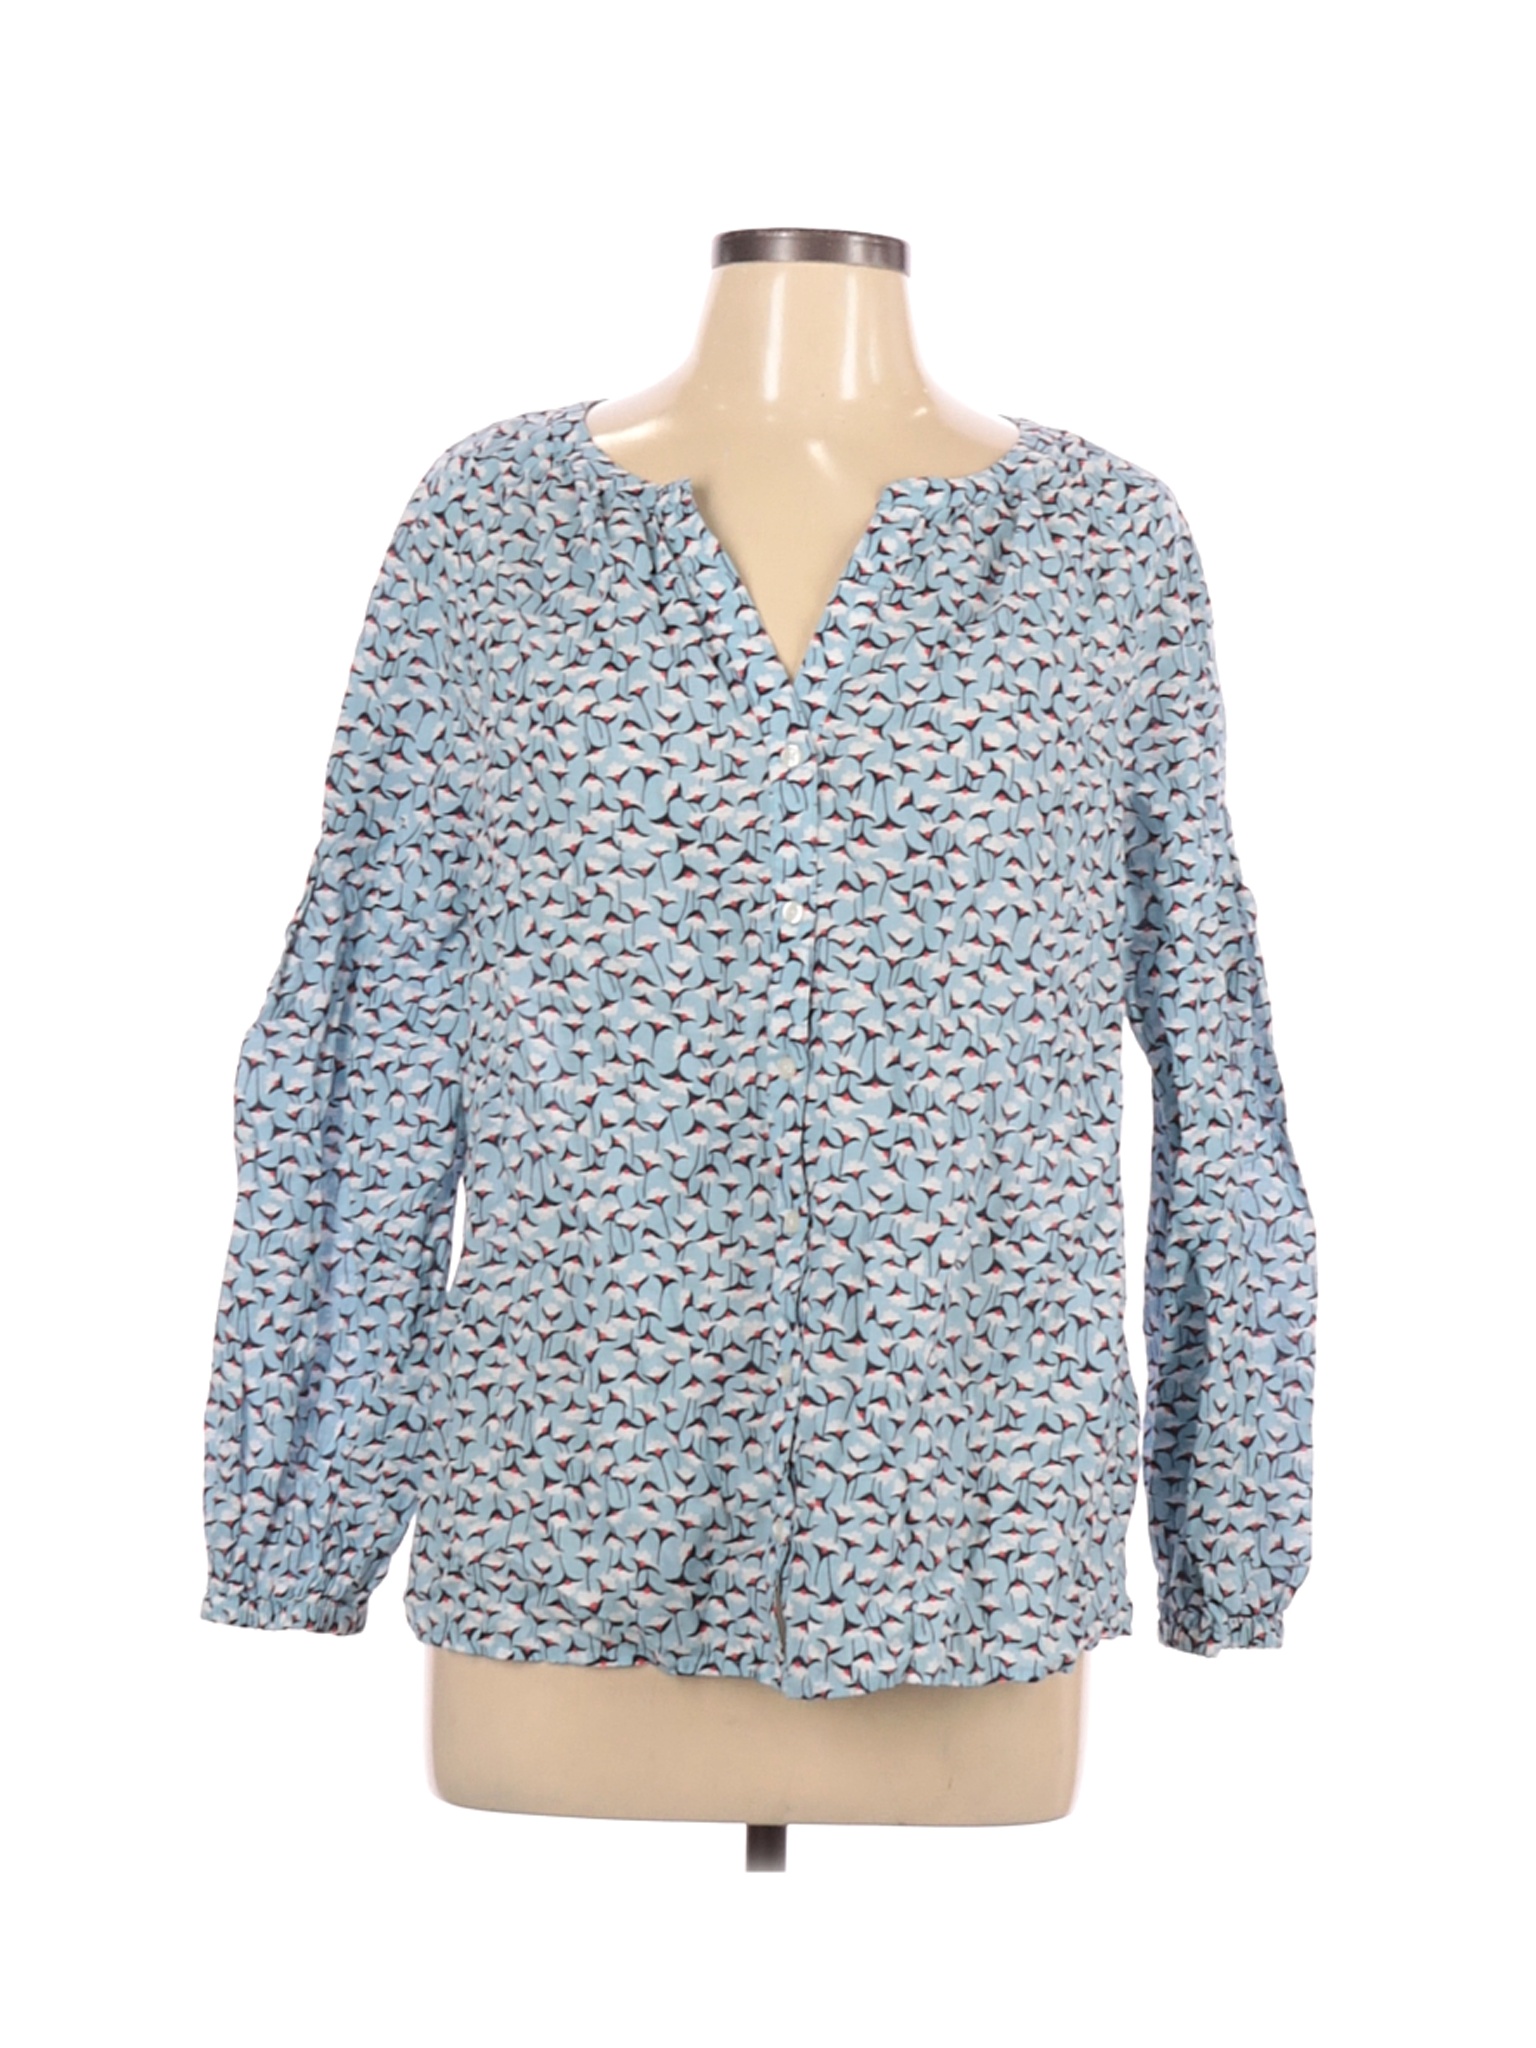 Boden Women Blue Long Sleeve Blouse 12 | eBay